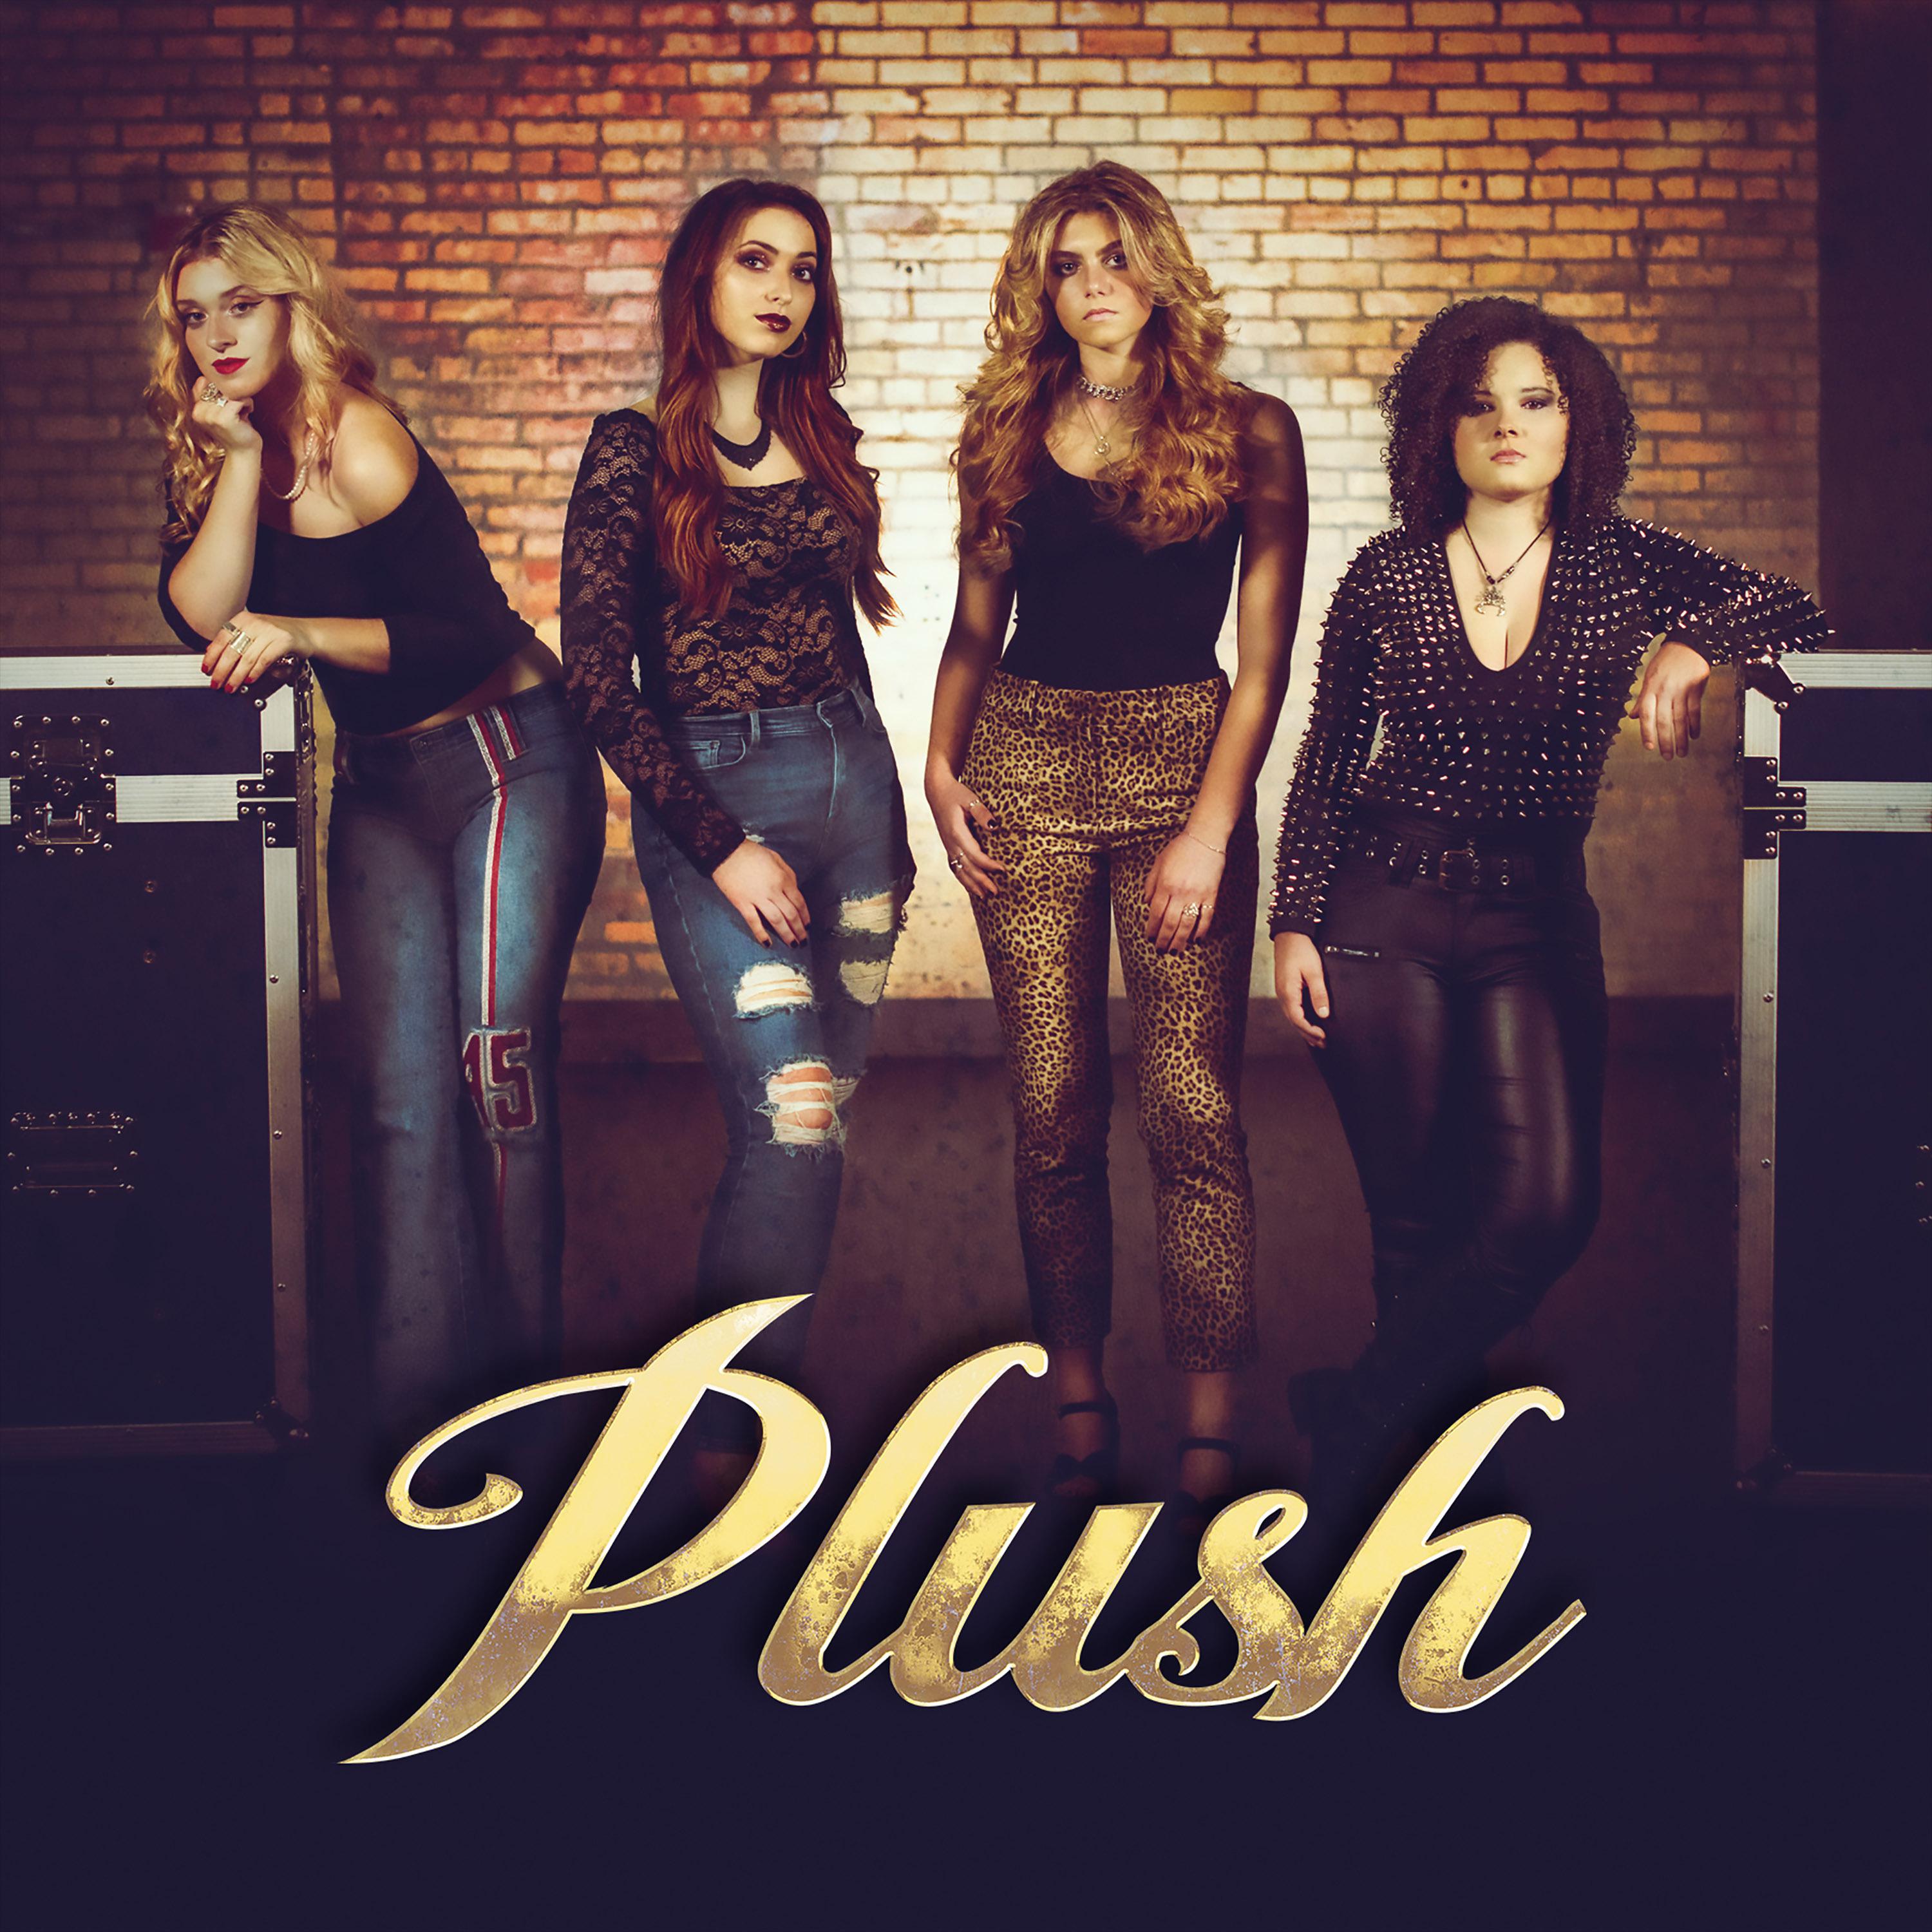 Plush — Sober cover artwork